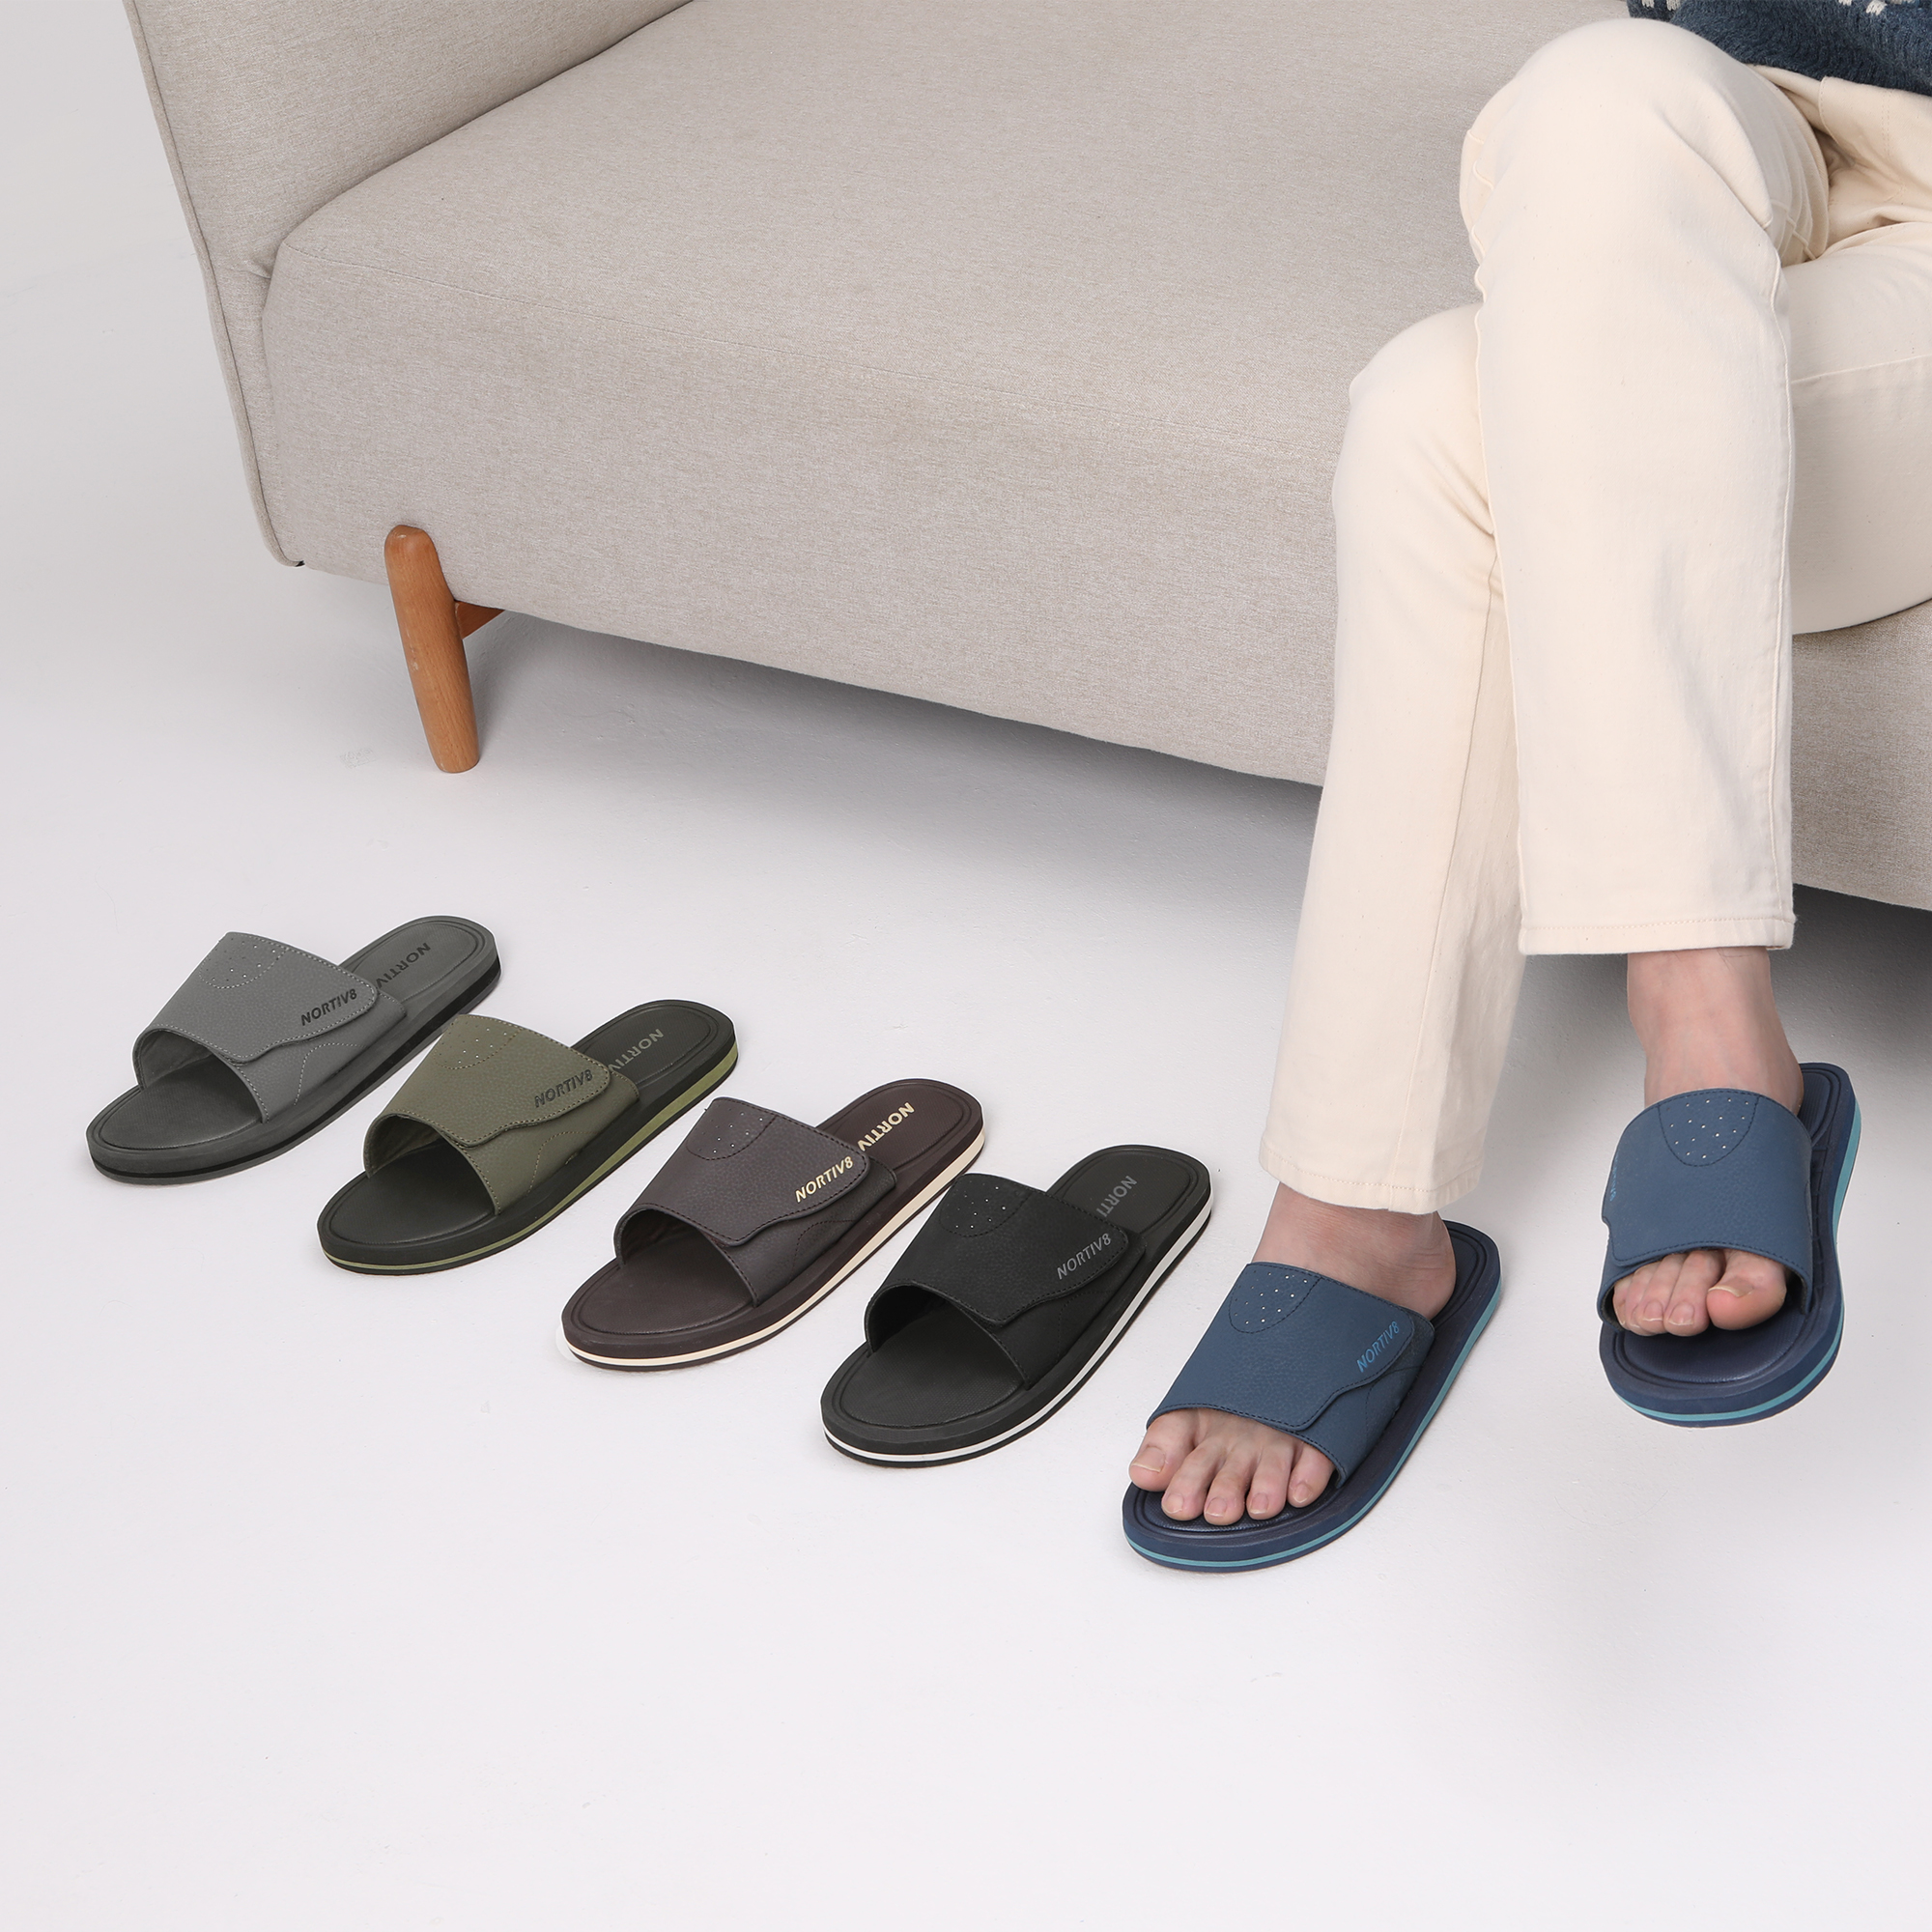 Nortiv8 Men's Memory Foam Adjustable Slide Sandals Comfort Lightweight Summer Beach Sandals Shoes FUSION GREY Size 9 - image 4 of 5